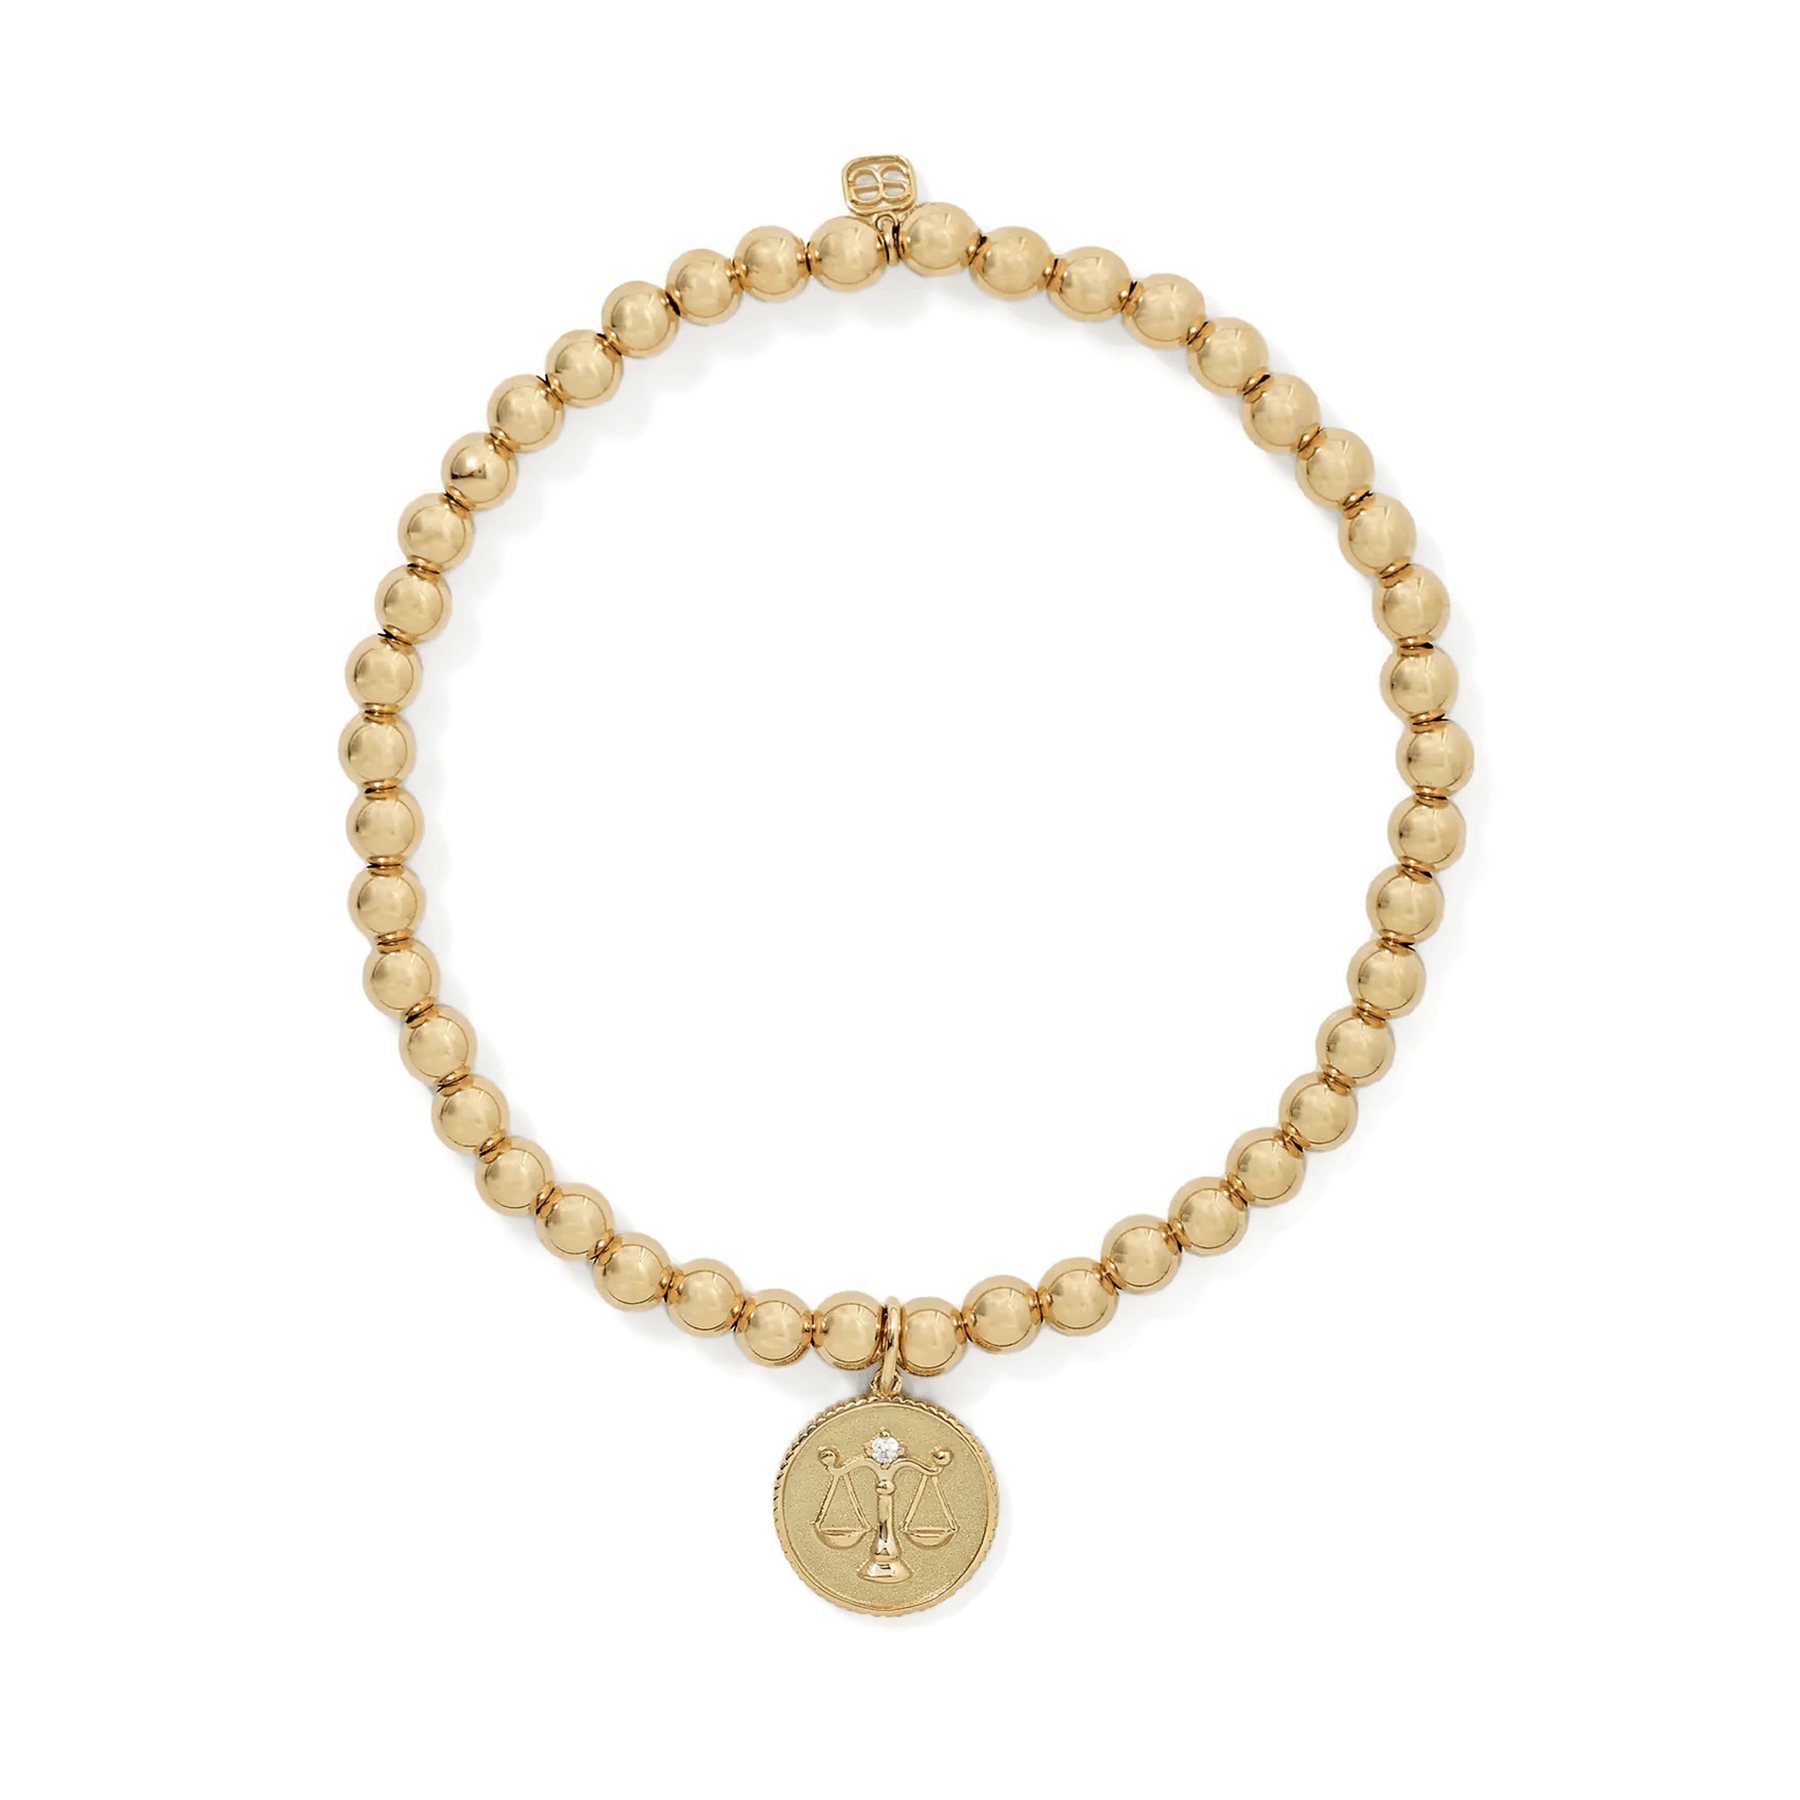 Sydney Evan Gold Diamond Libra Bracelet, $955 at Net-a-Porter